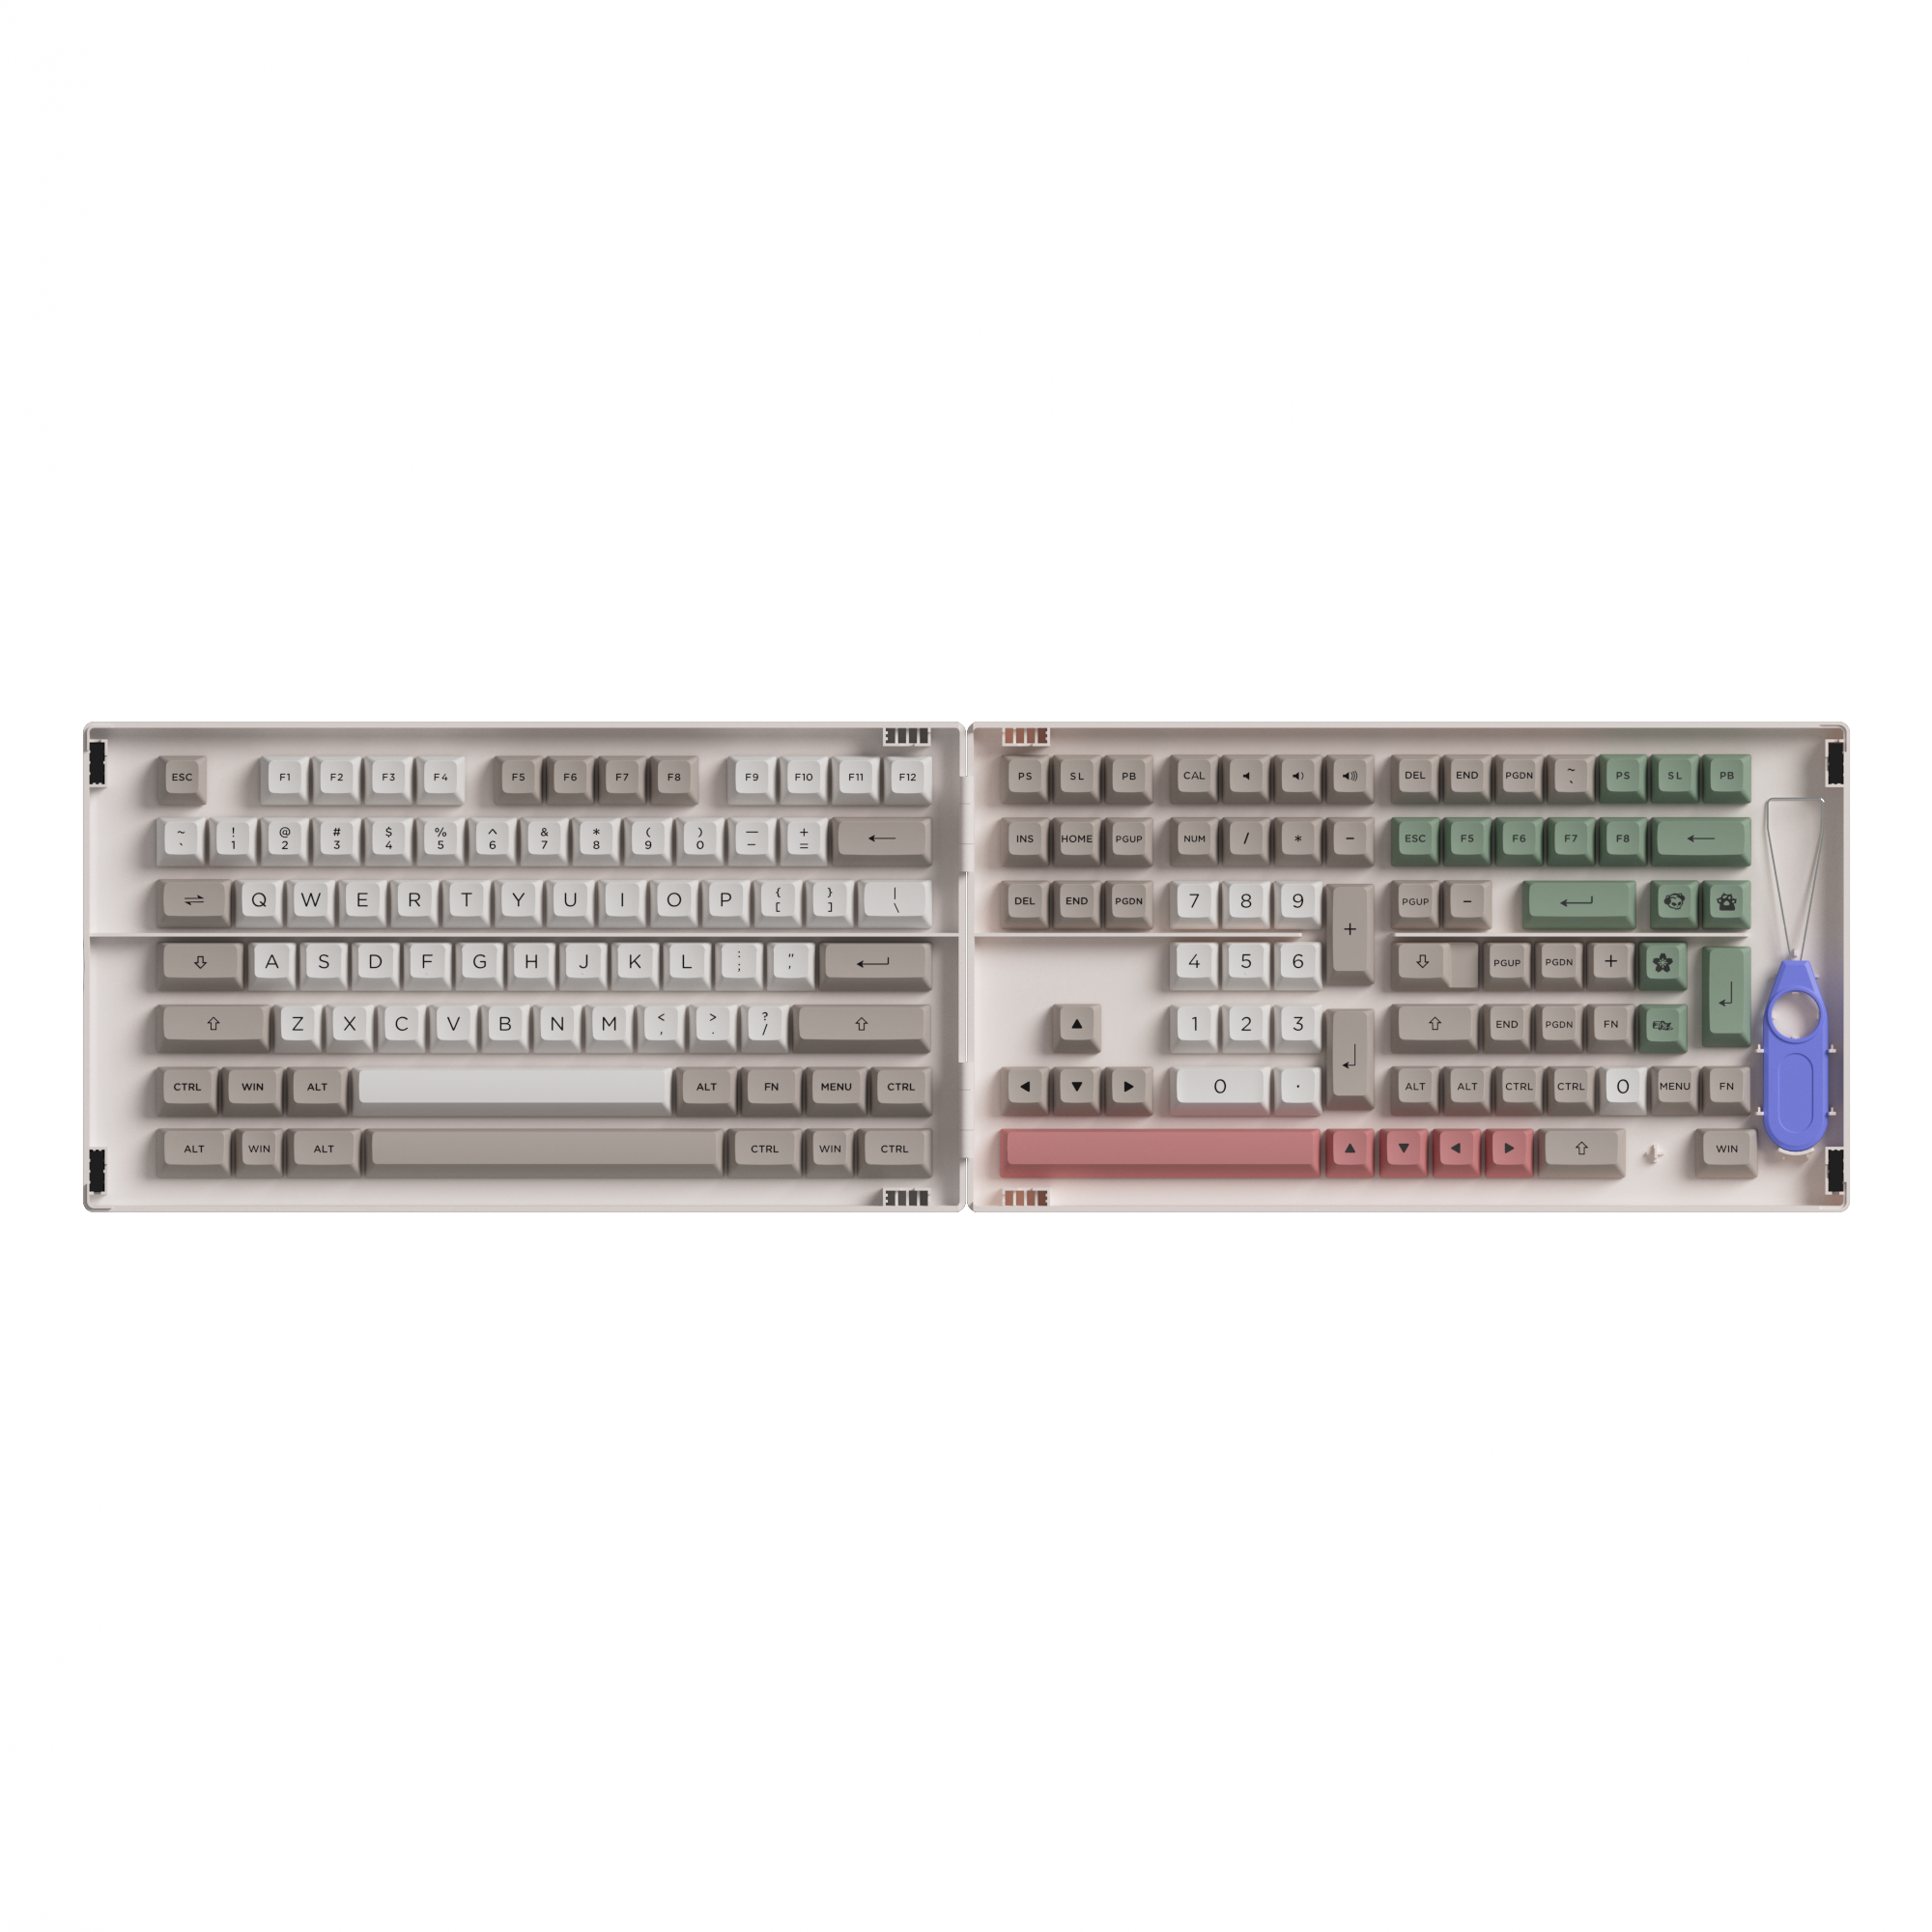 (Discontinued) 9009 Retro Keycap Set Cherry Profile